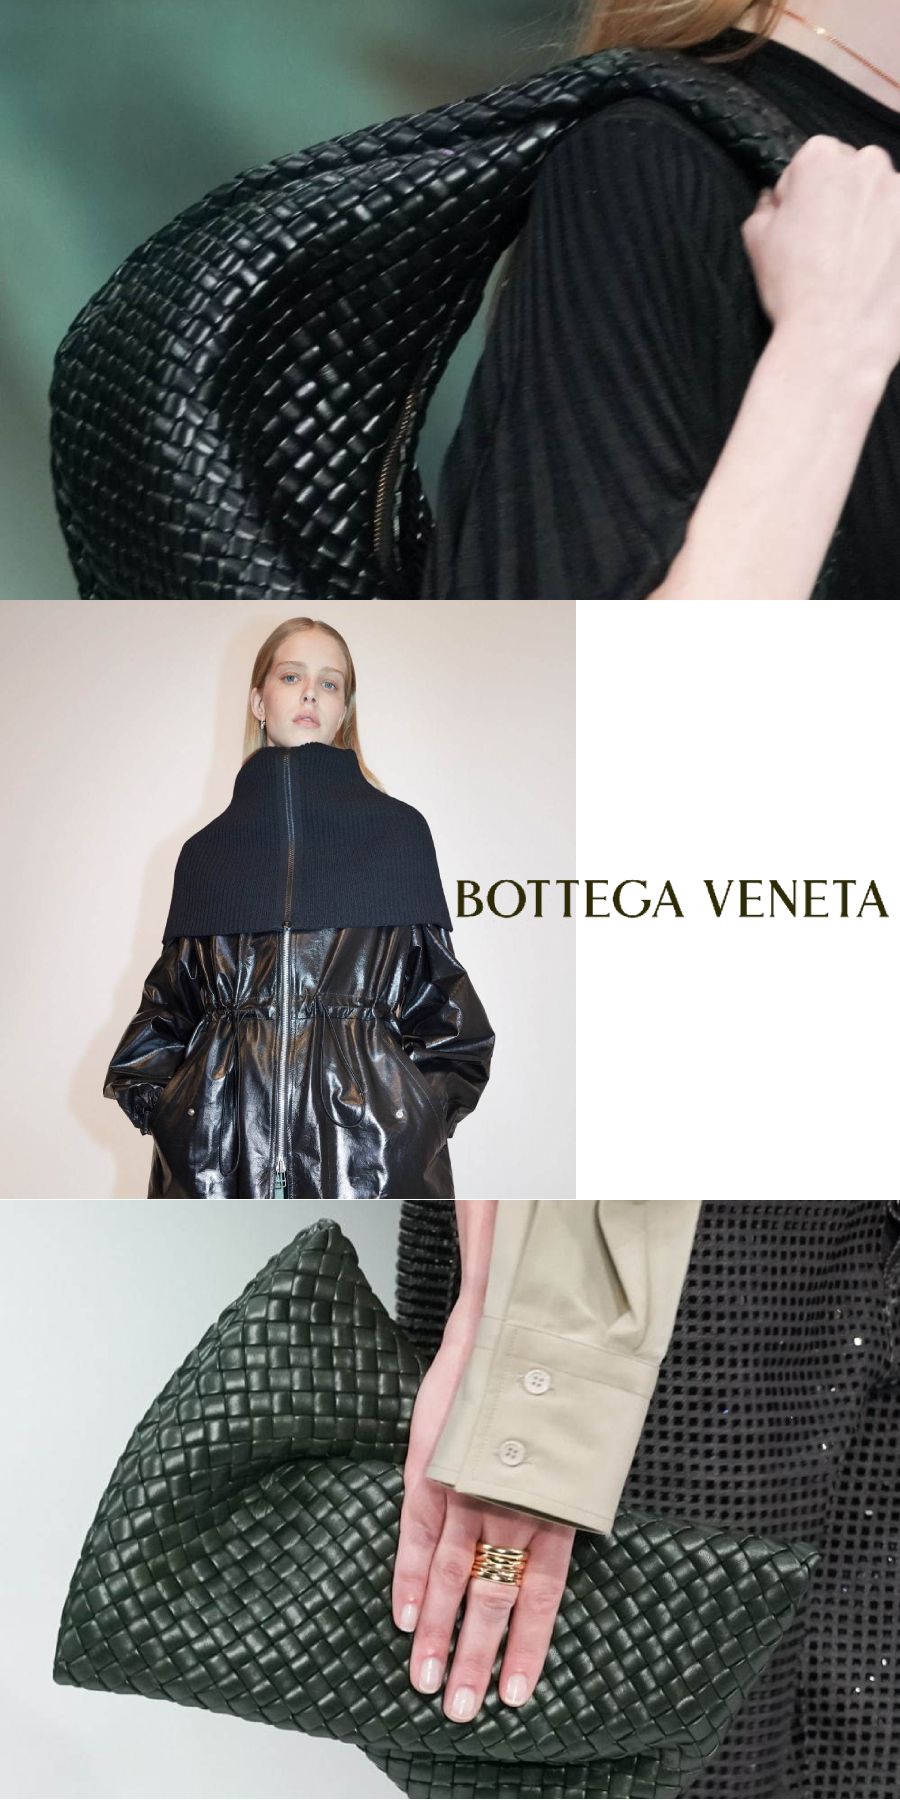 Bottega Veneta(ボッテガヴェネタ)買取専門店